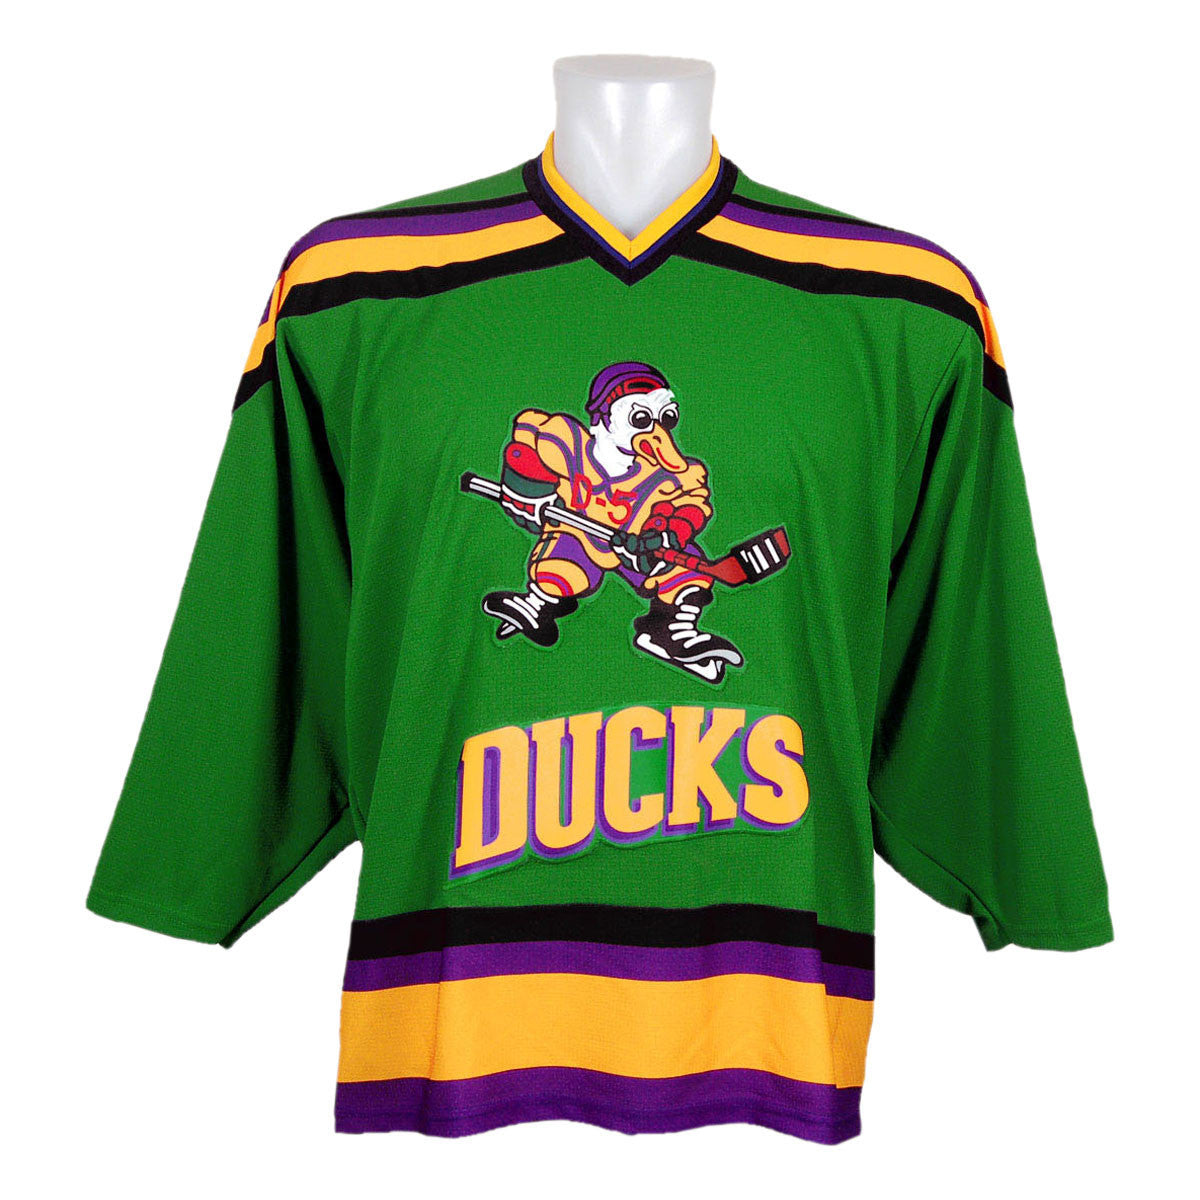 mighty ducks movie jersey replica